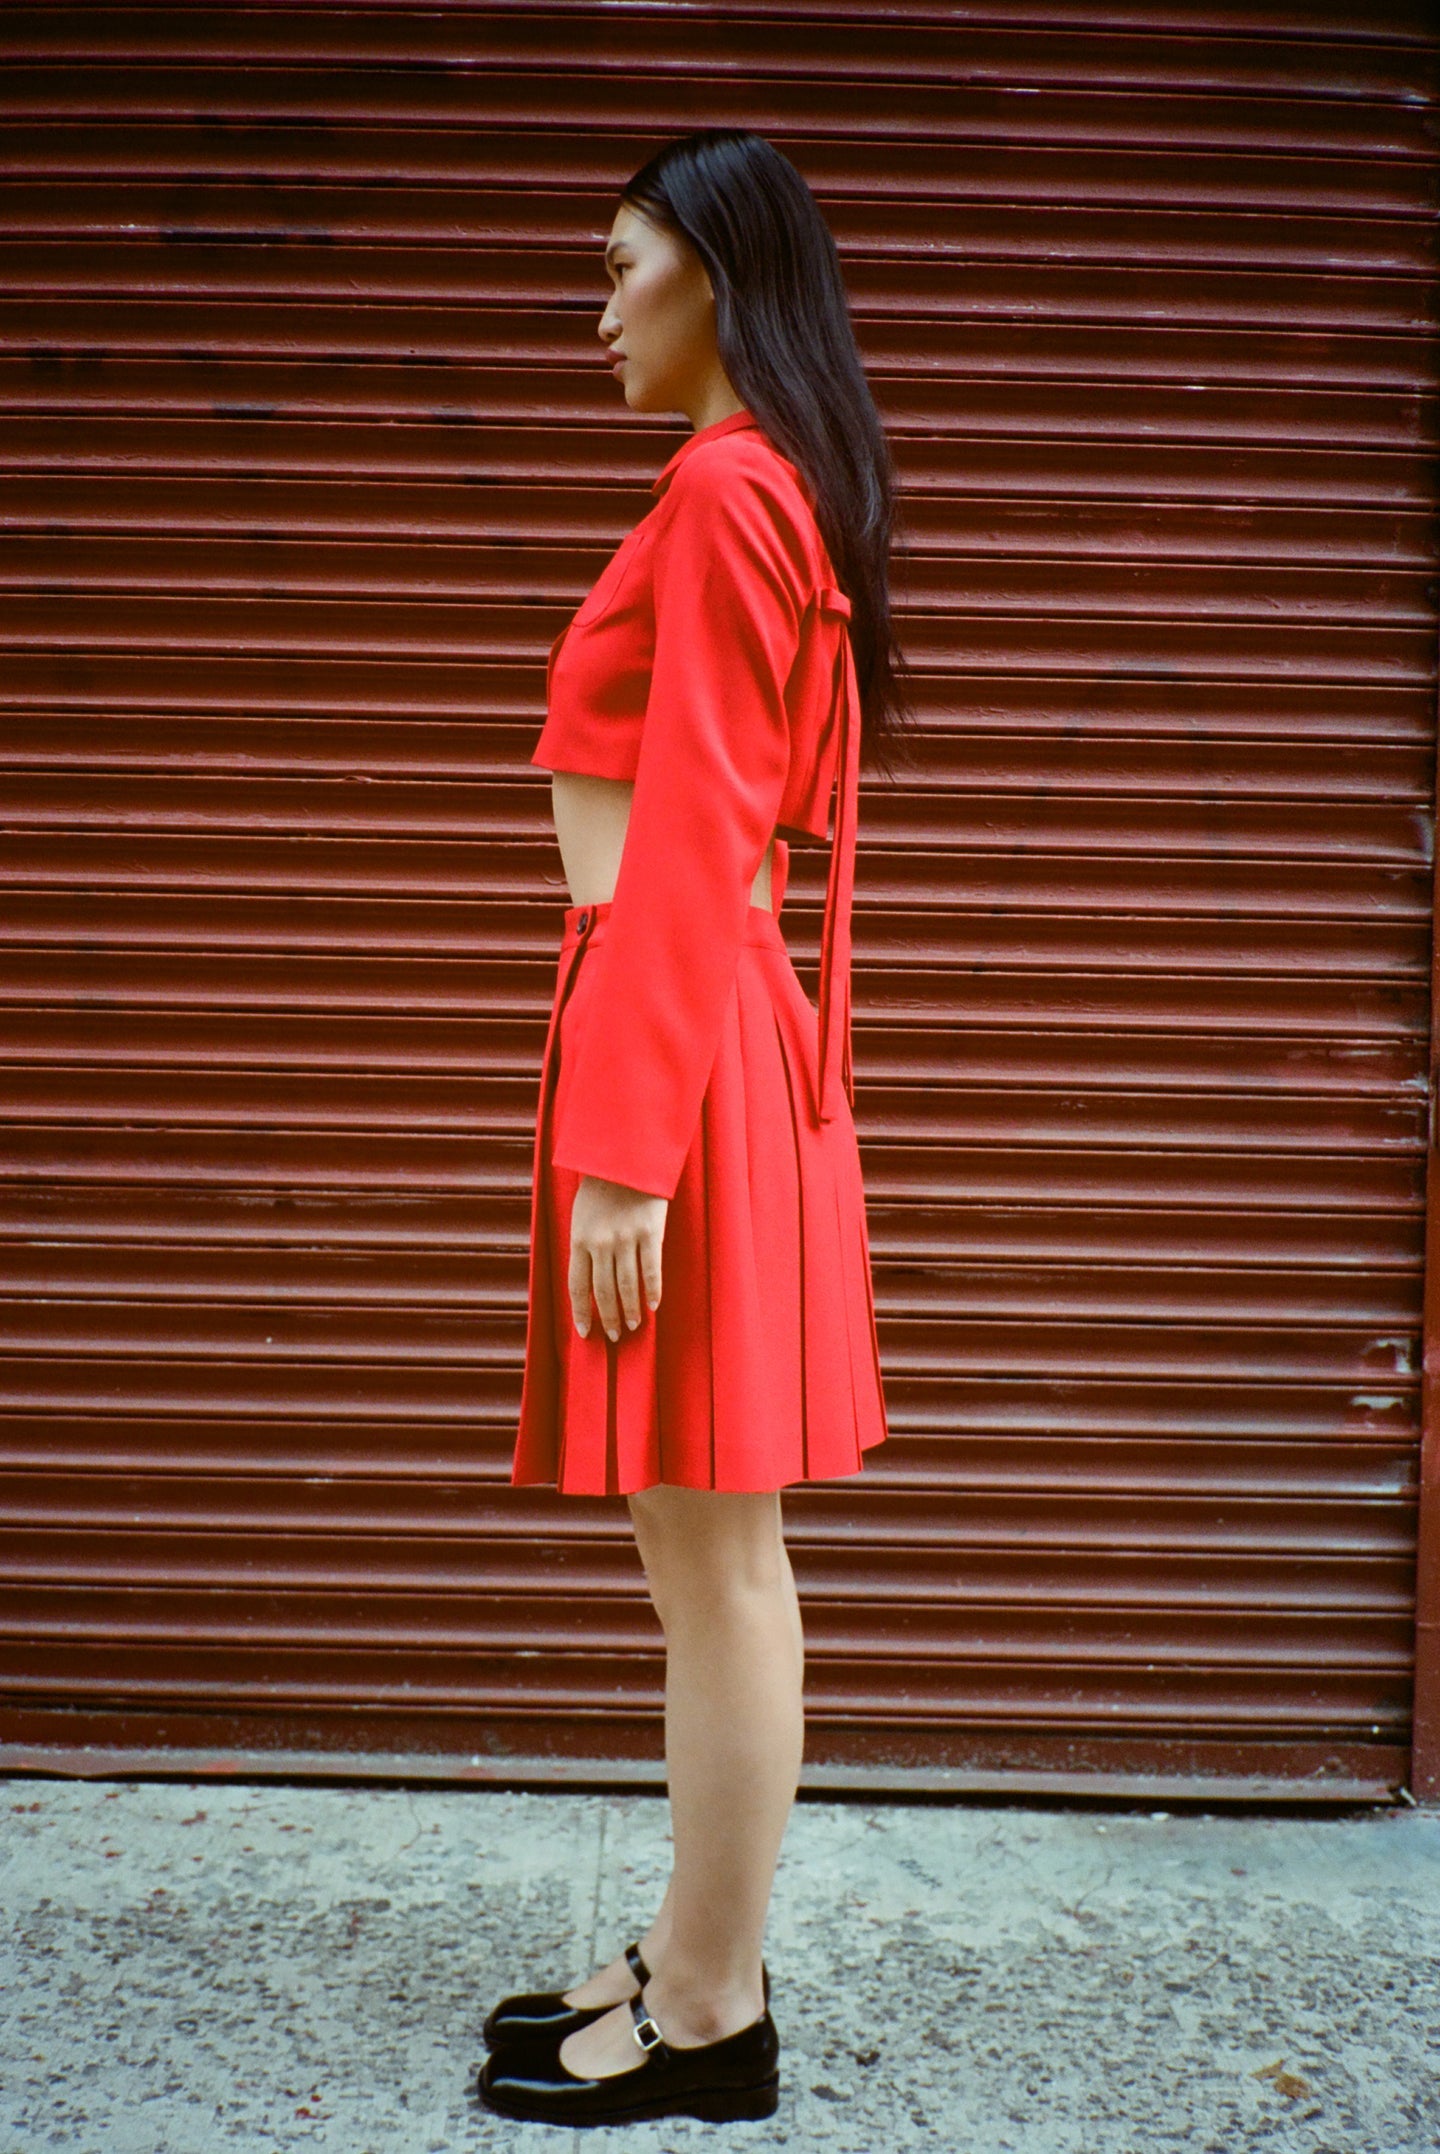 Astra Skort in Red by Sandy Liang http://www.shoprecital.com